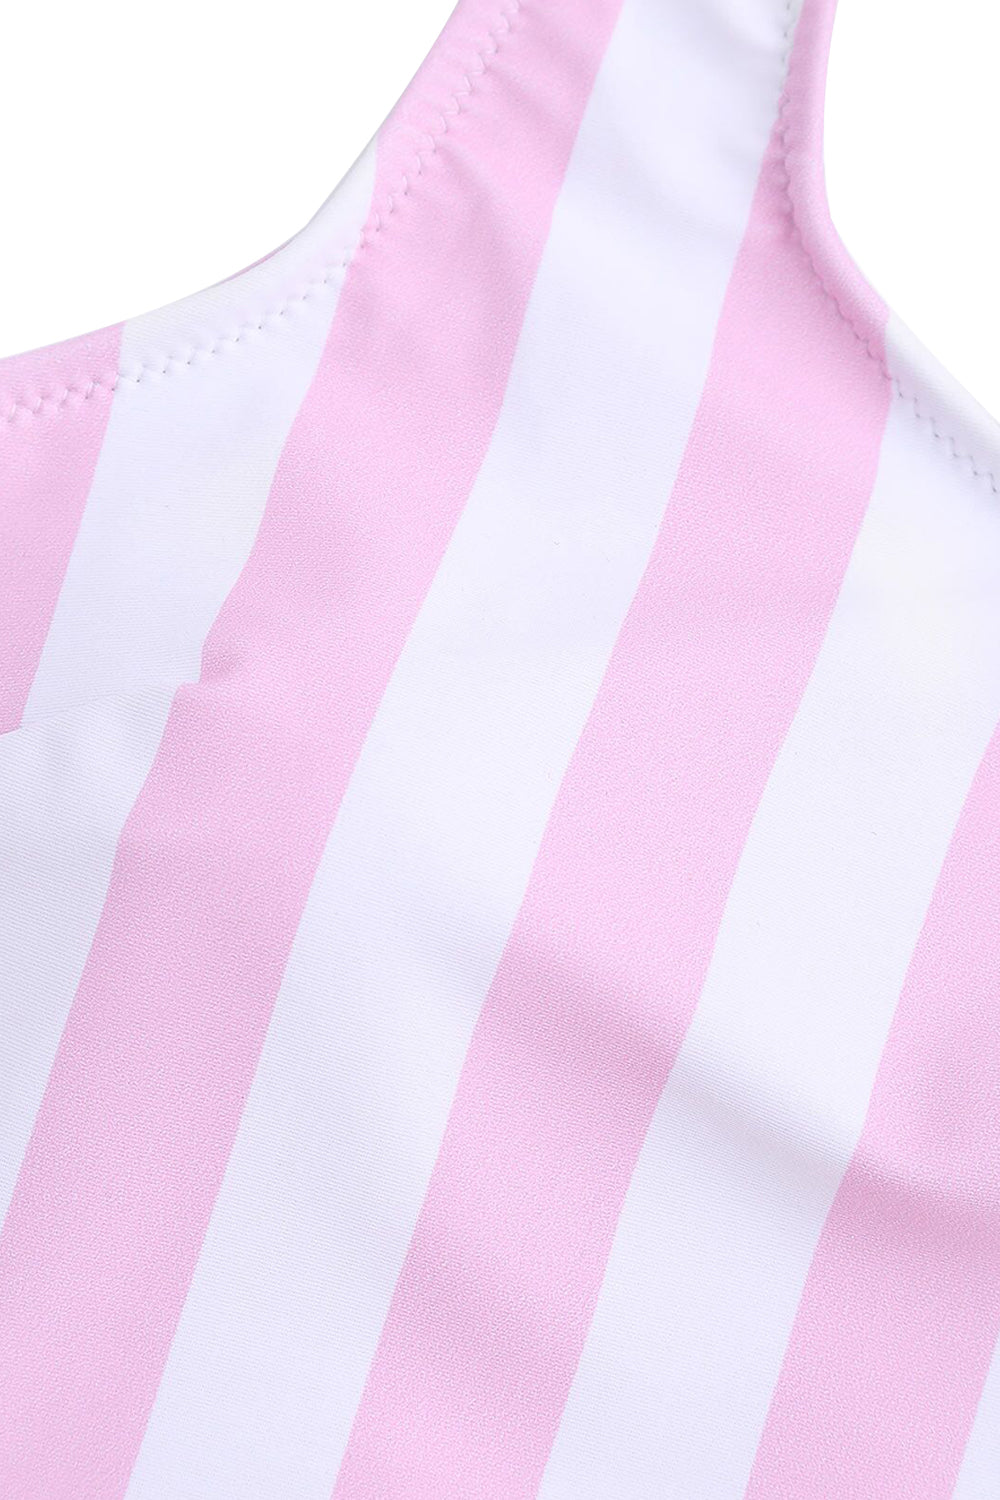 Iyasson Stripe Printing Backless One-piece swimsuit